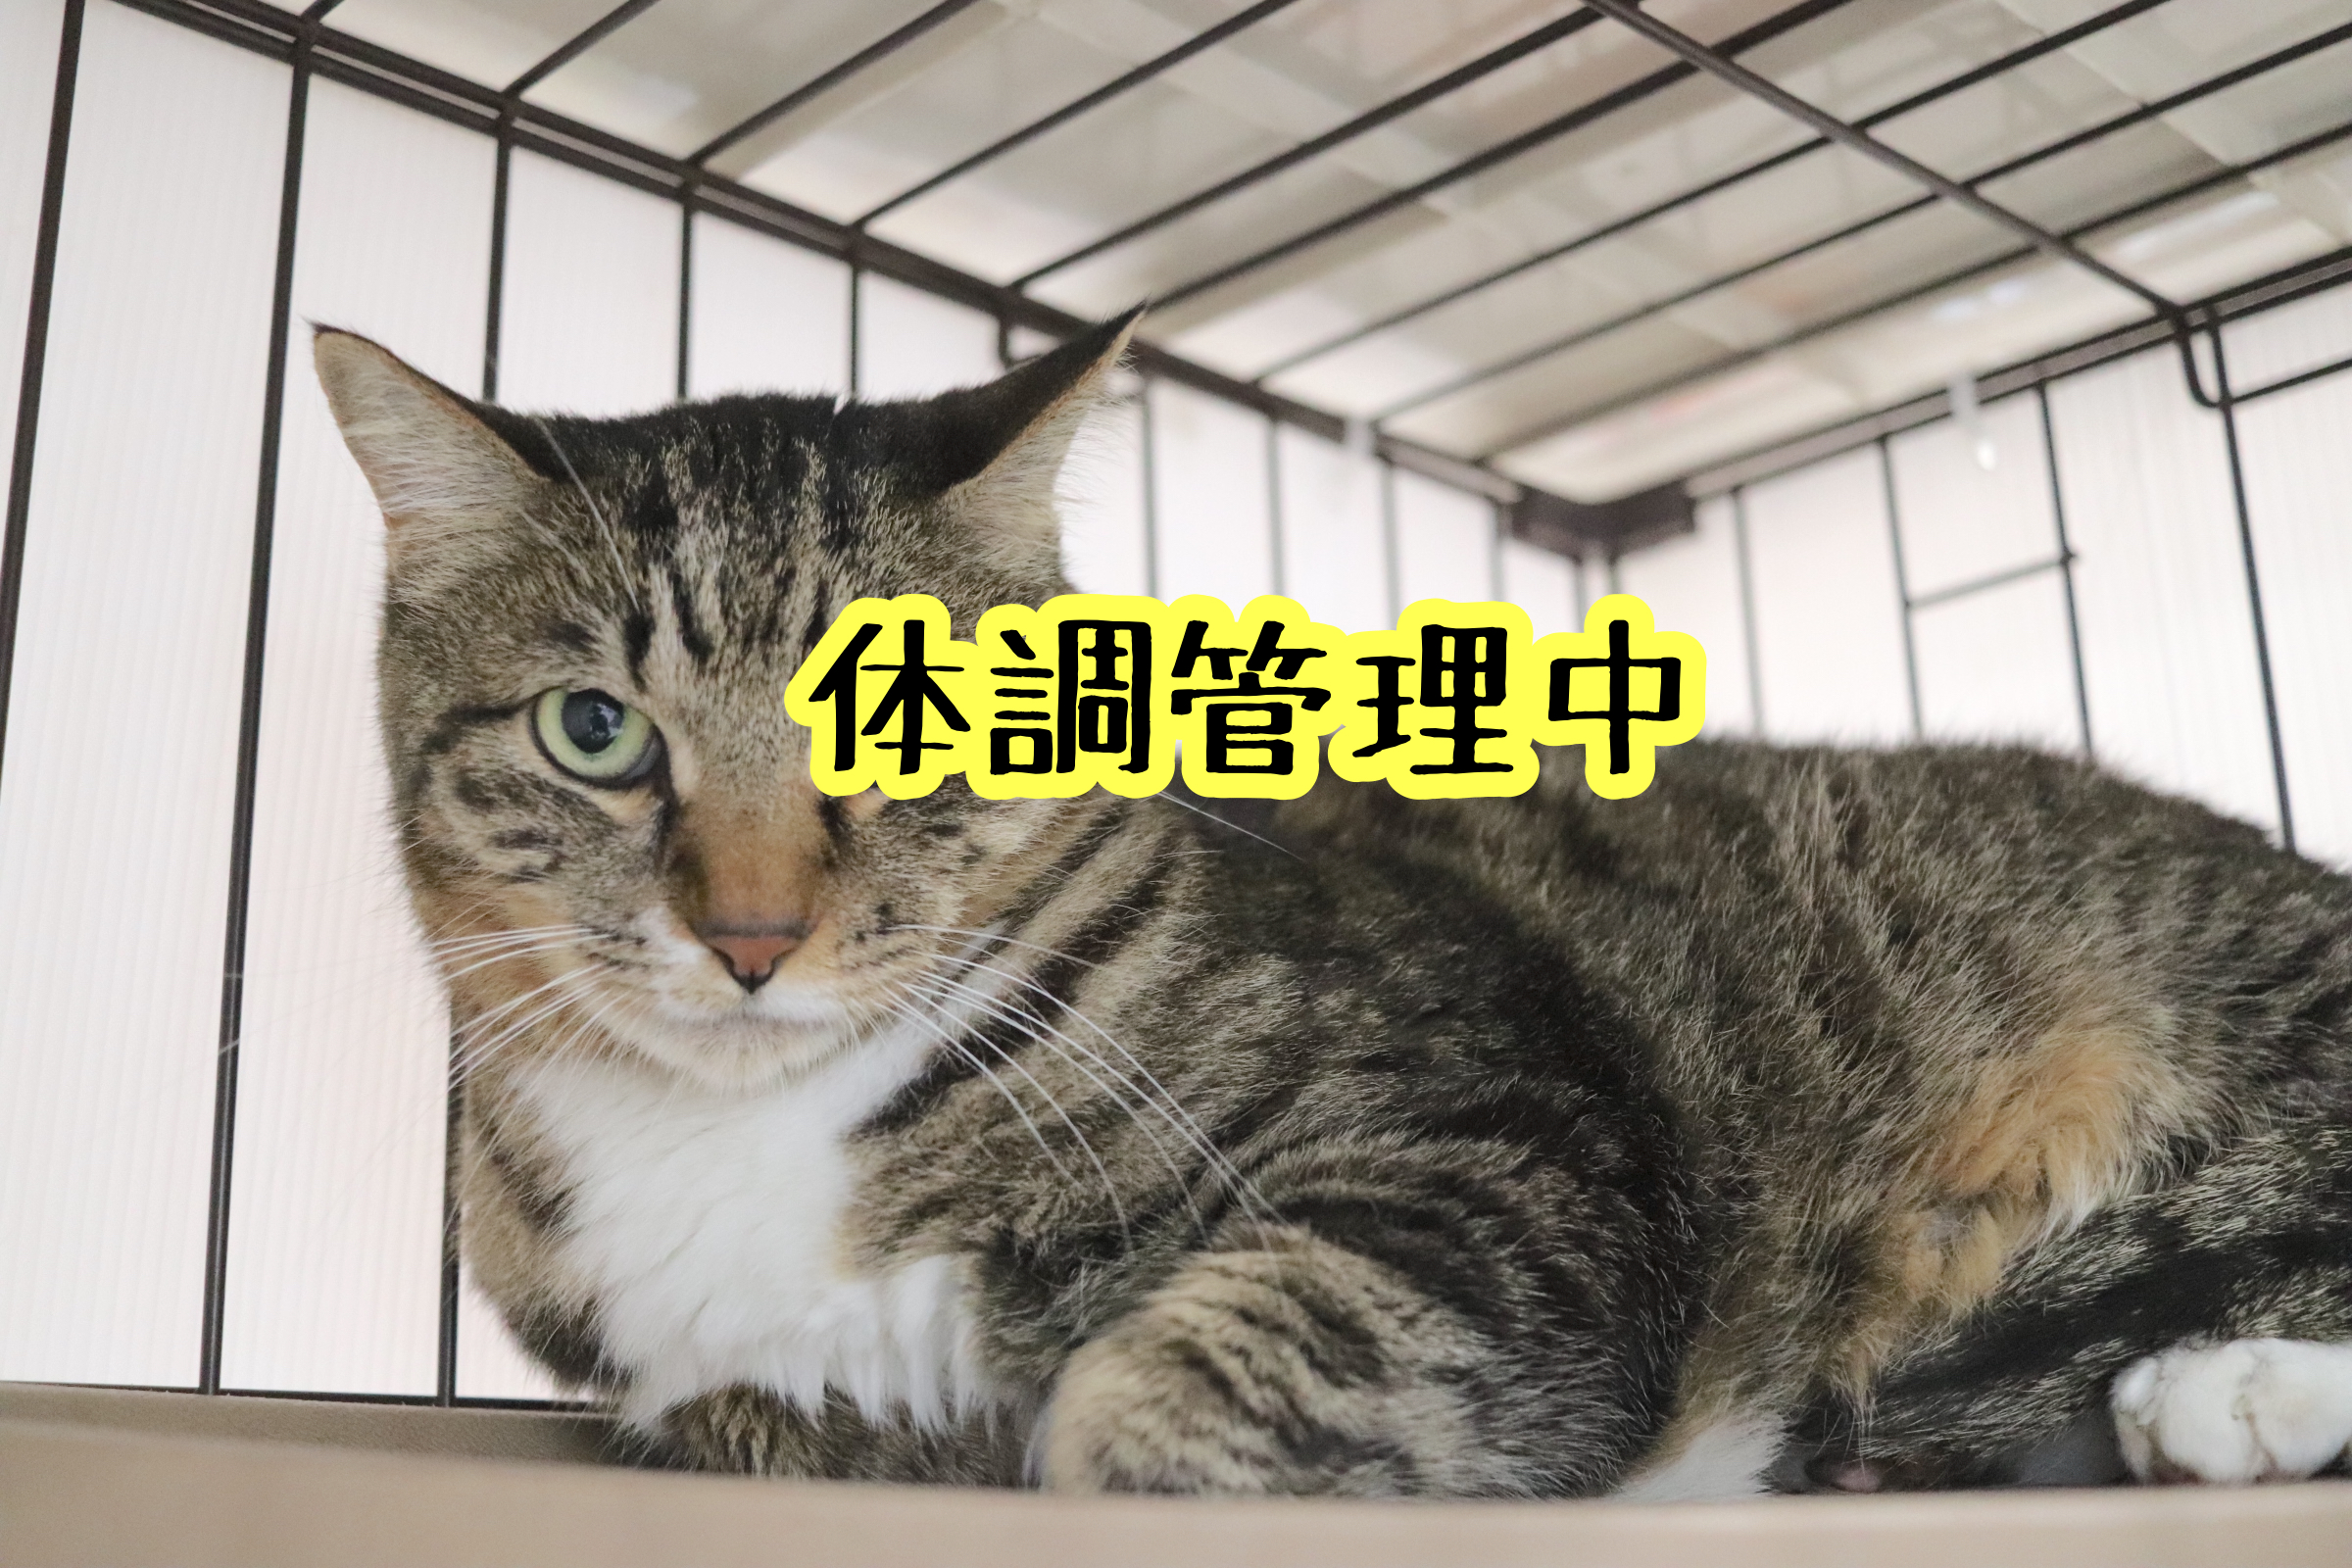 <ul>
<li>猫種：日本猫</li>
<li>名前（性別）：ちび(男の子)</li>
<li>年齢：2015年頃生まれ</li>
<li>保護経緯：飼い主が高齢になり介護施設入居のため飼育困難</li>
</ul>
